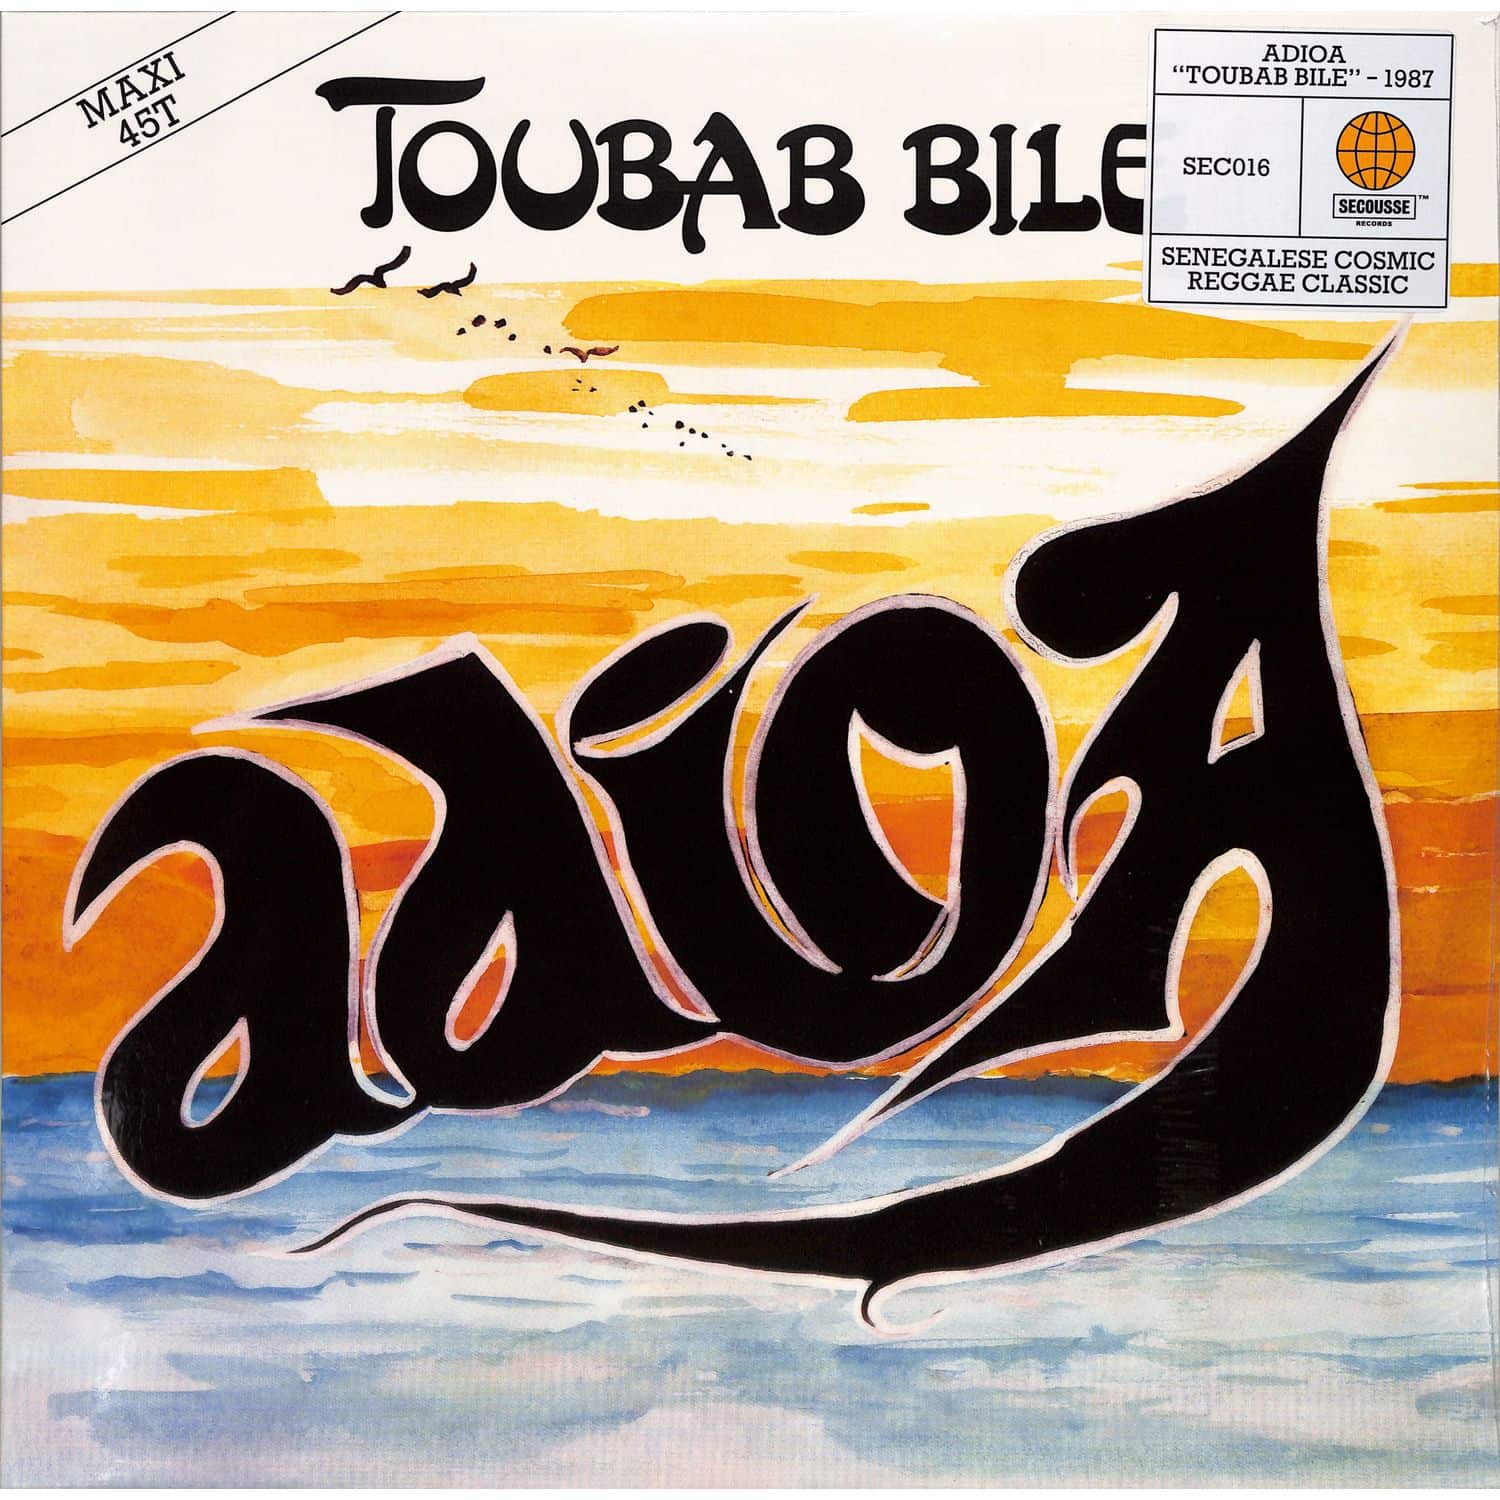 Adioa - TOUBAB BILE